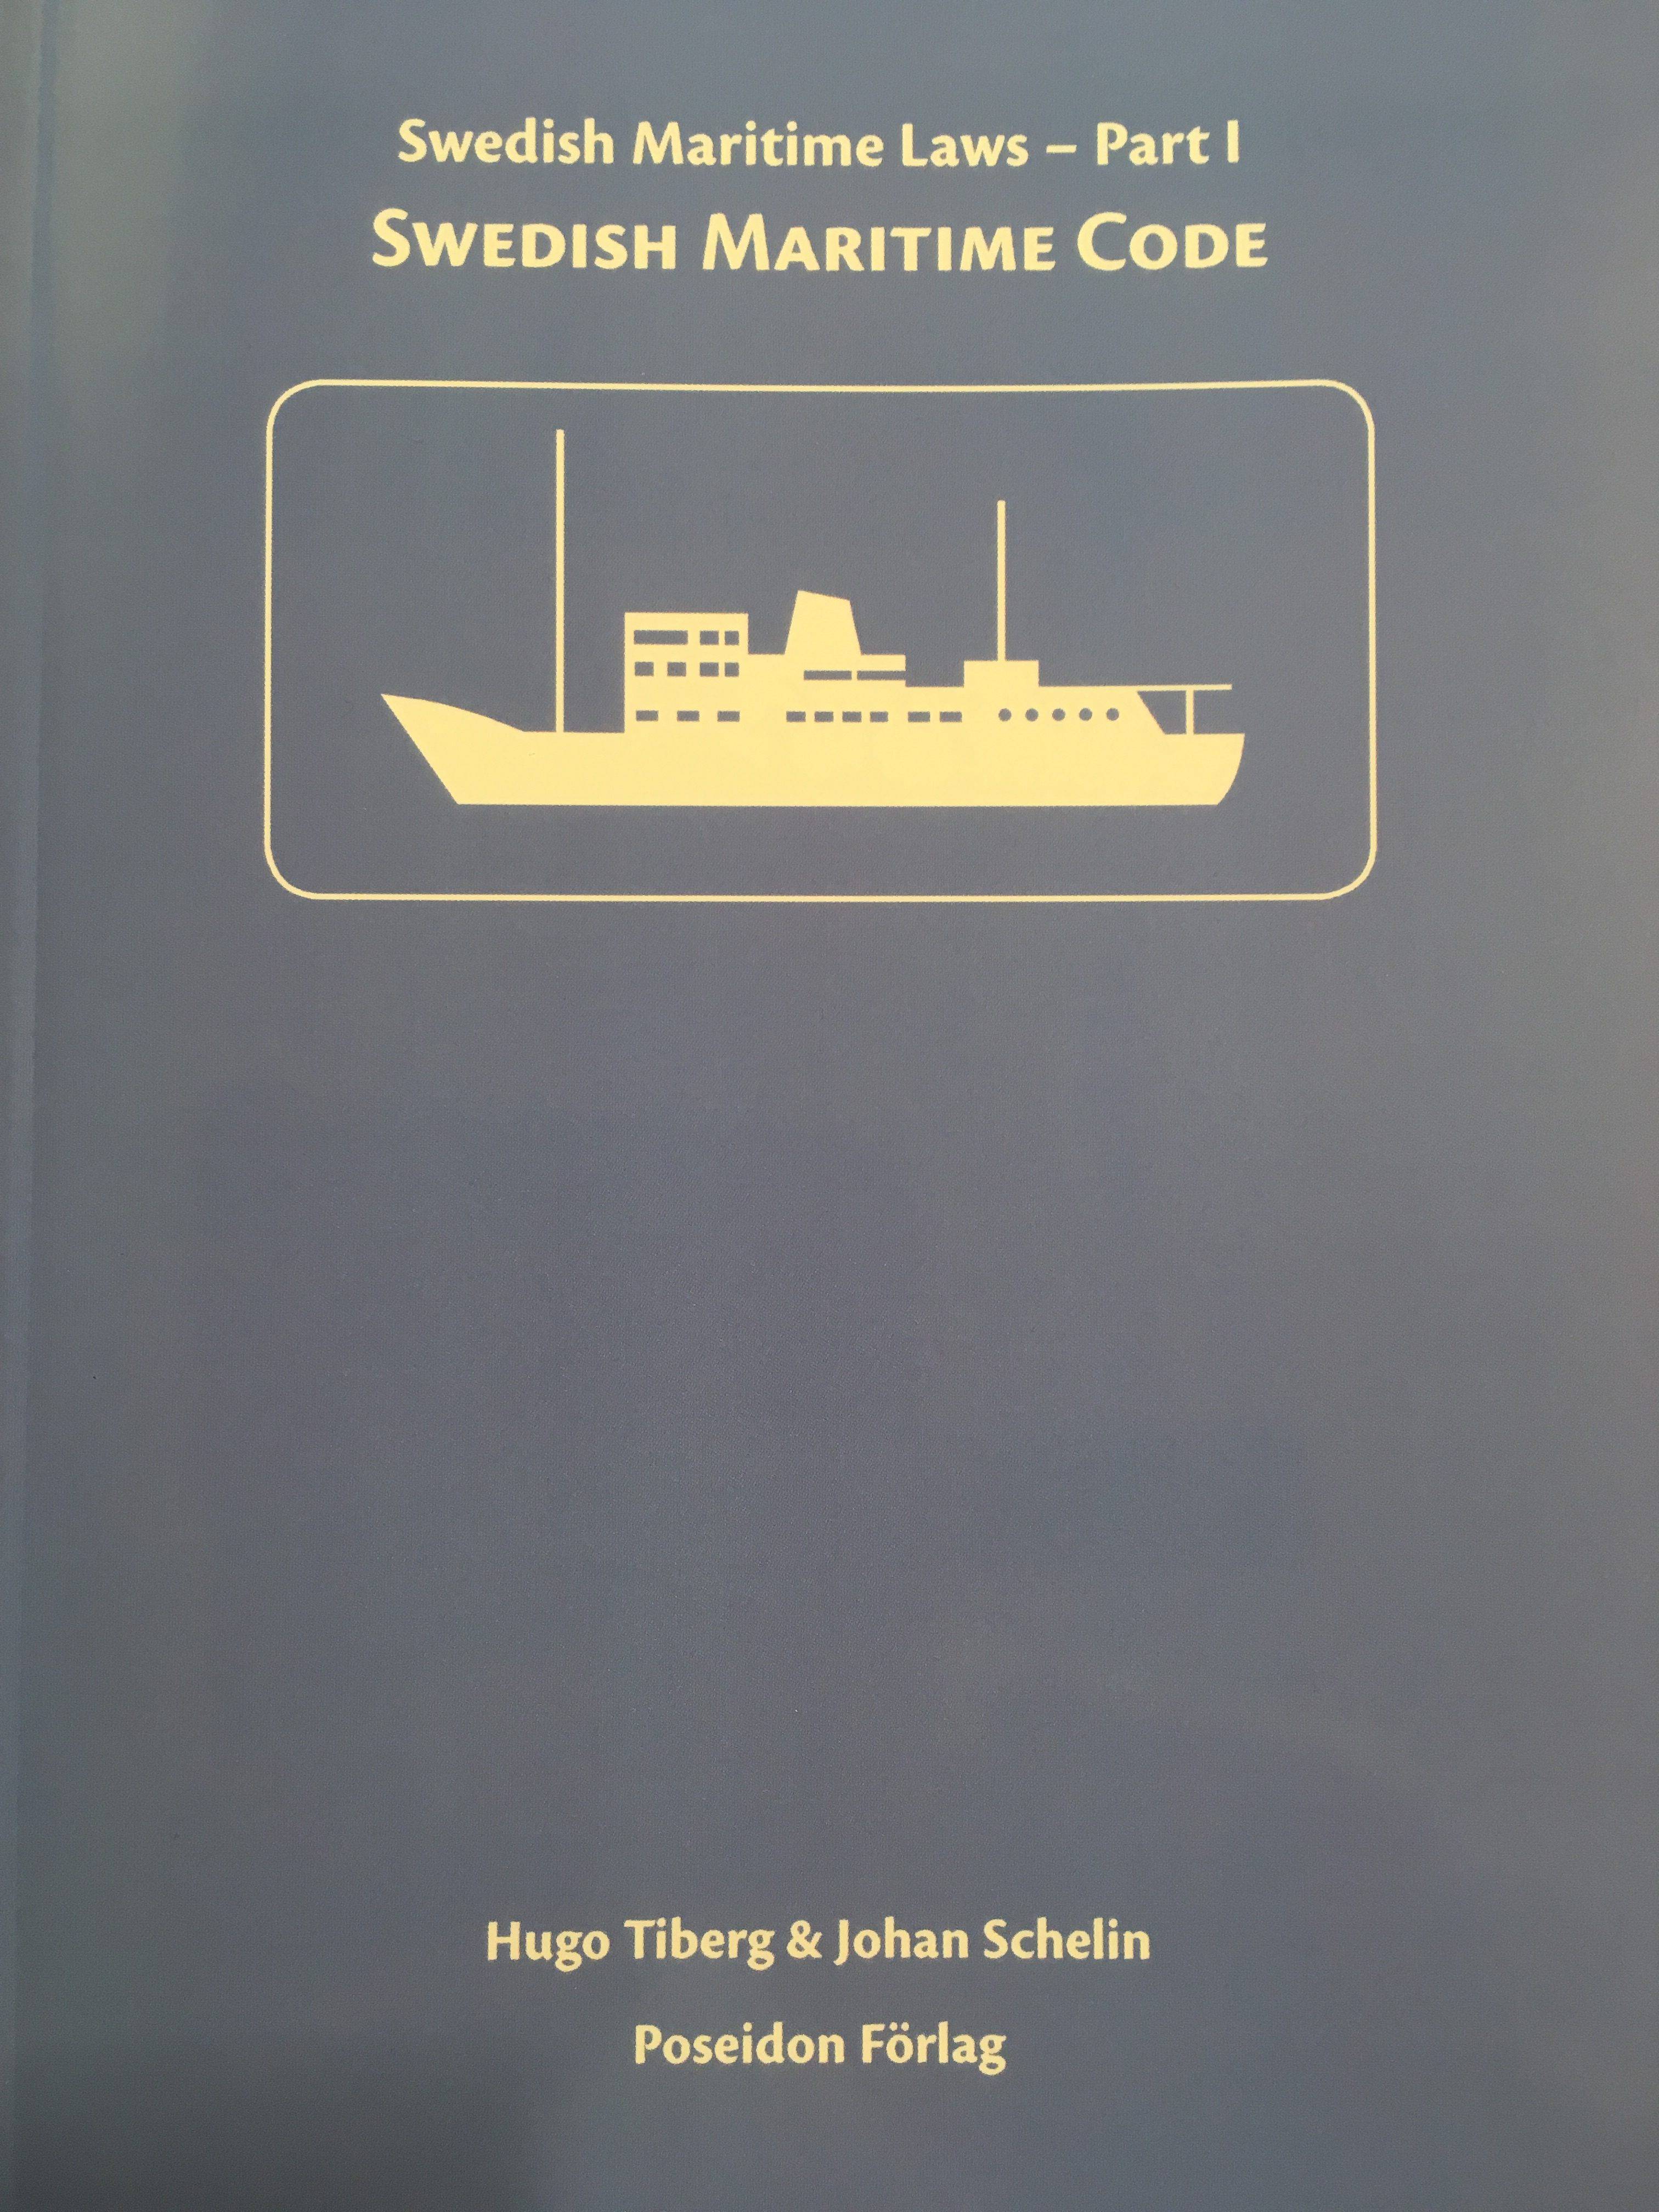 Swedish Maritime Code